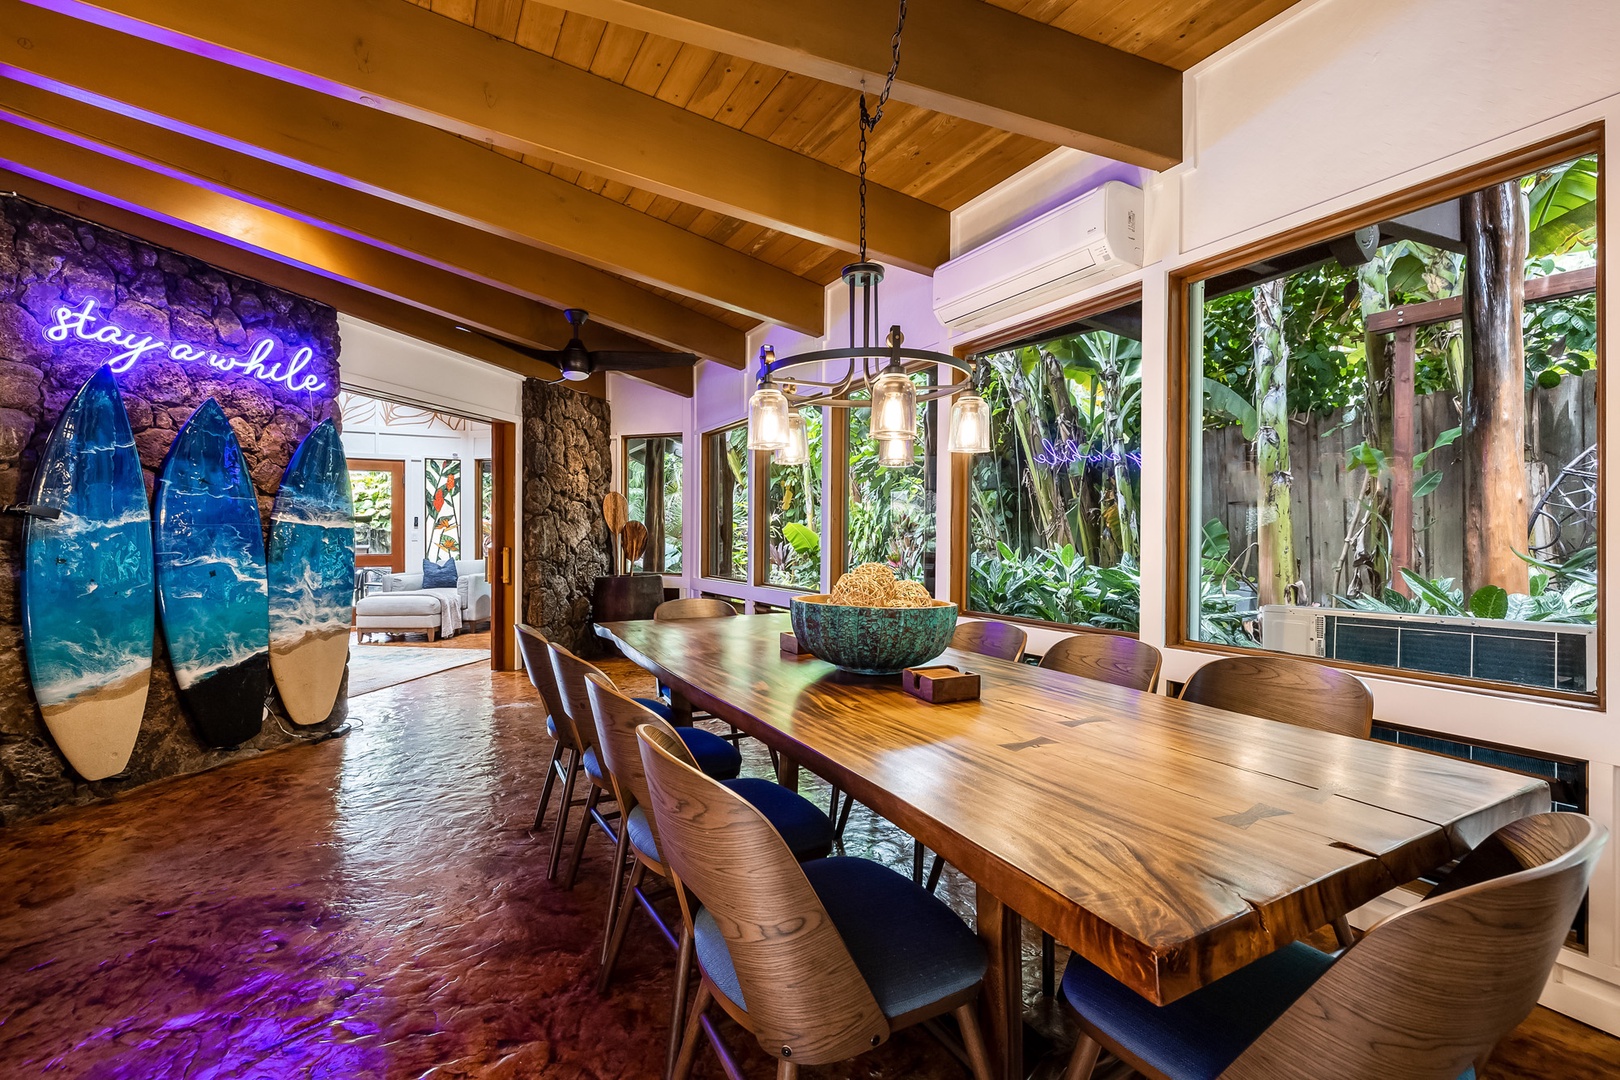 Waimanalo Vacation Rentals, Hawaii Hobbit House - Naturally-lit formal dining area has gorgeous garden views.